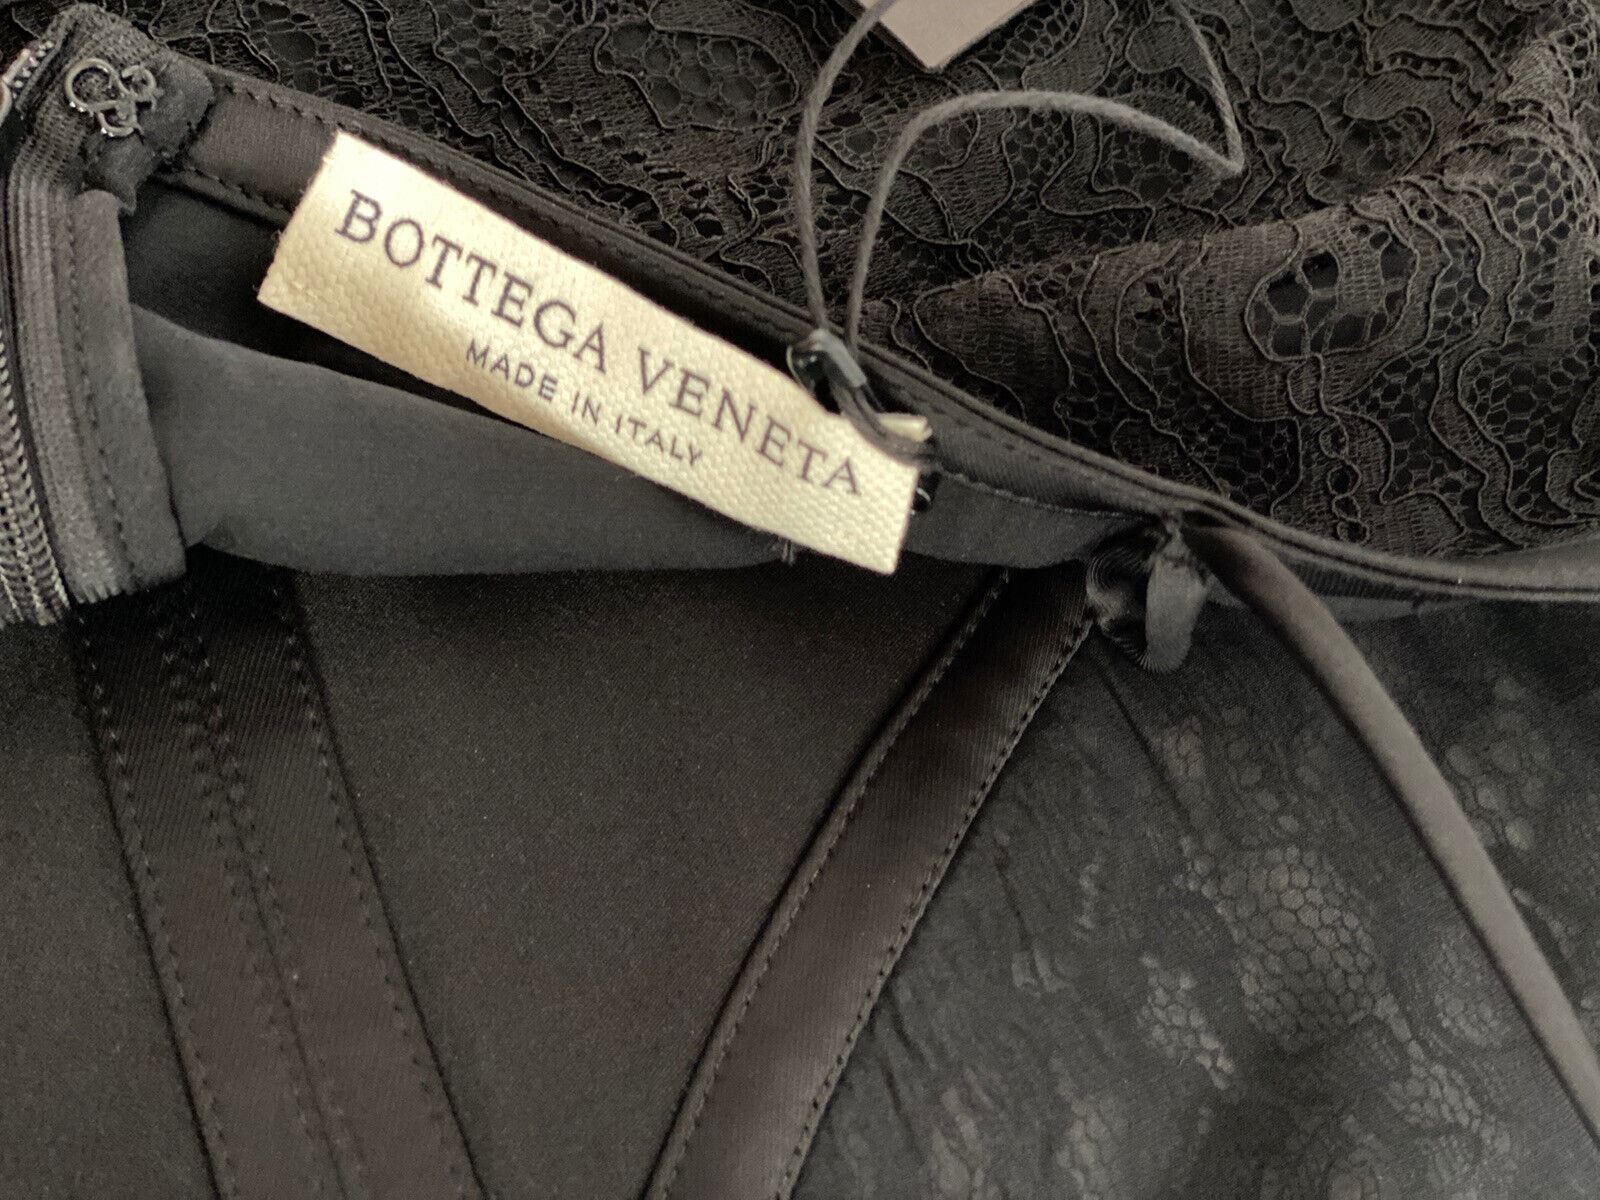 NWT $2380 Bottega Veneta Women's Black Sleep Dress 6 US (42 Bottega) 605980 IT